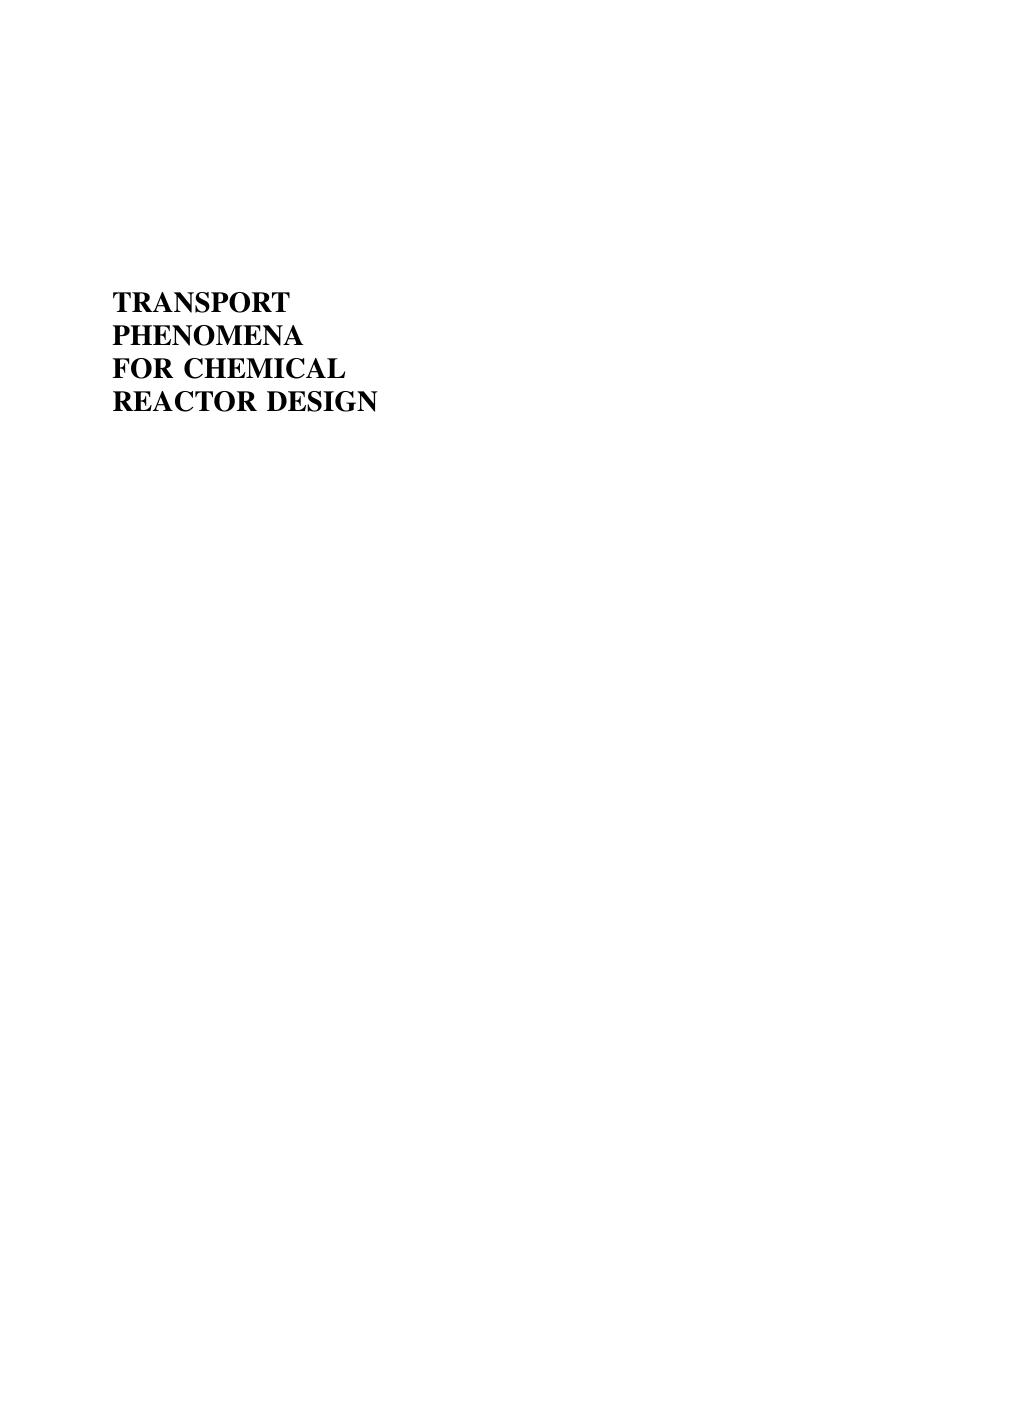 BELFIORE, L. A. (2002): Transport Phenomena for Chemical Reactor Design.